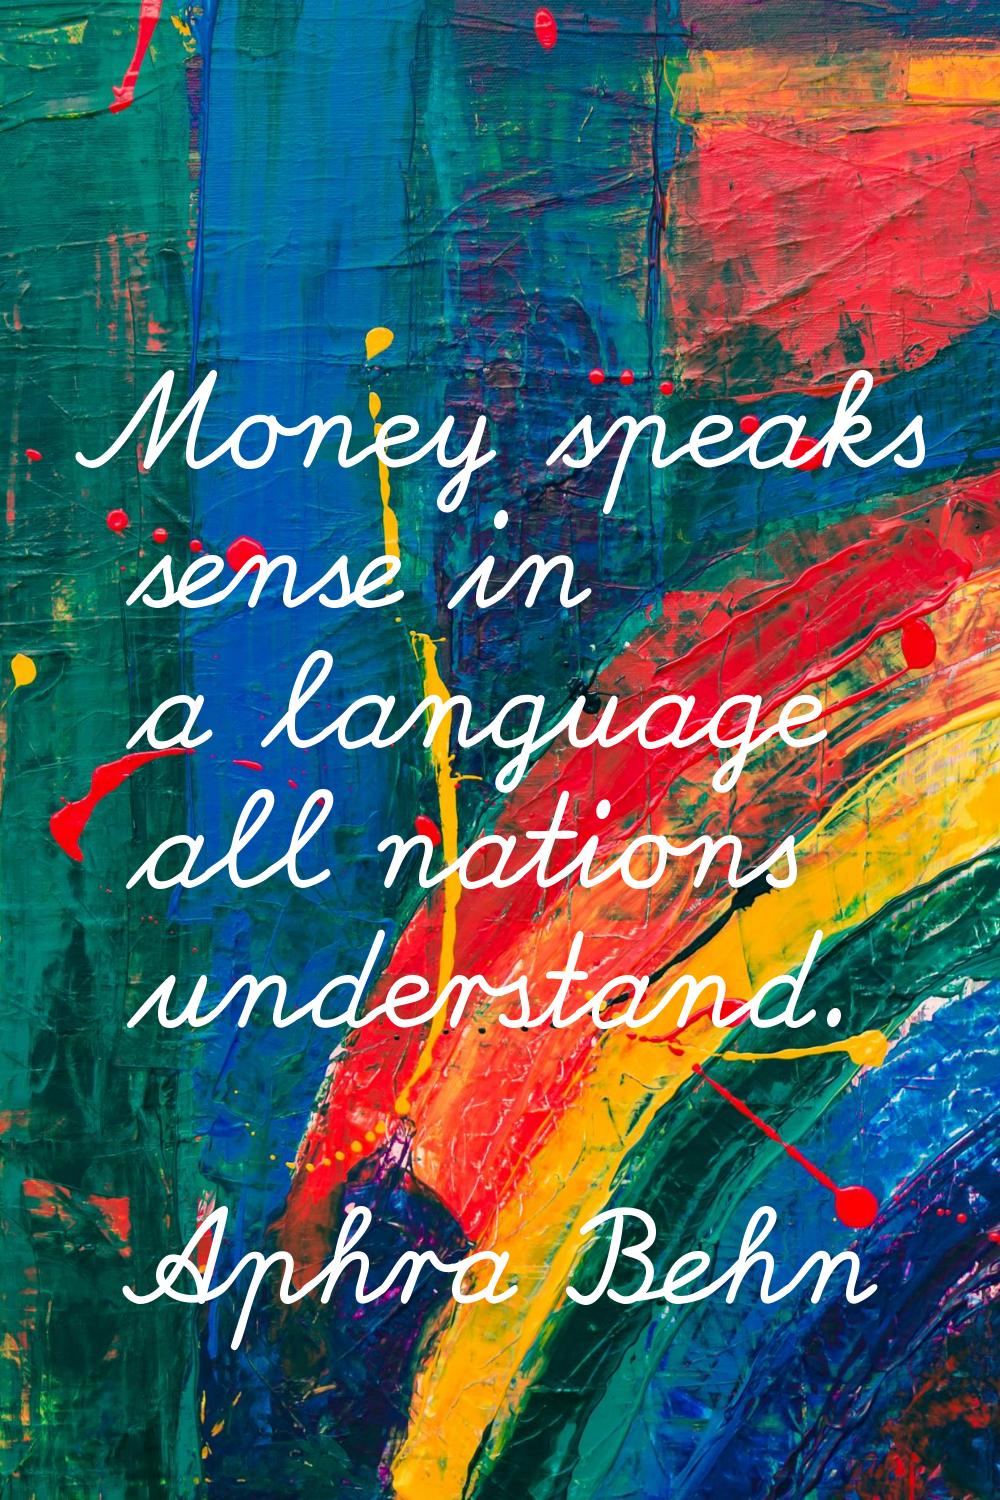 Money speaks sense in a language all nations understand.